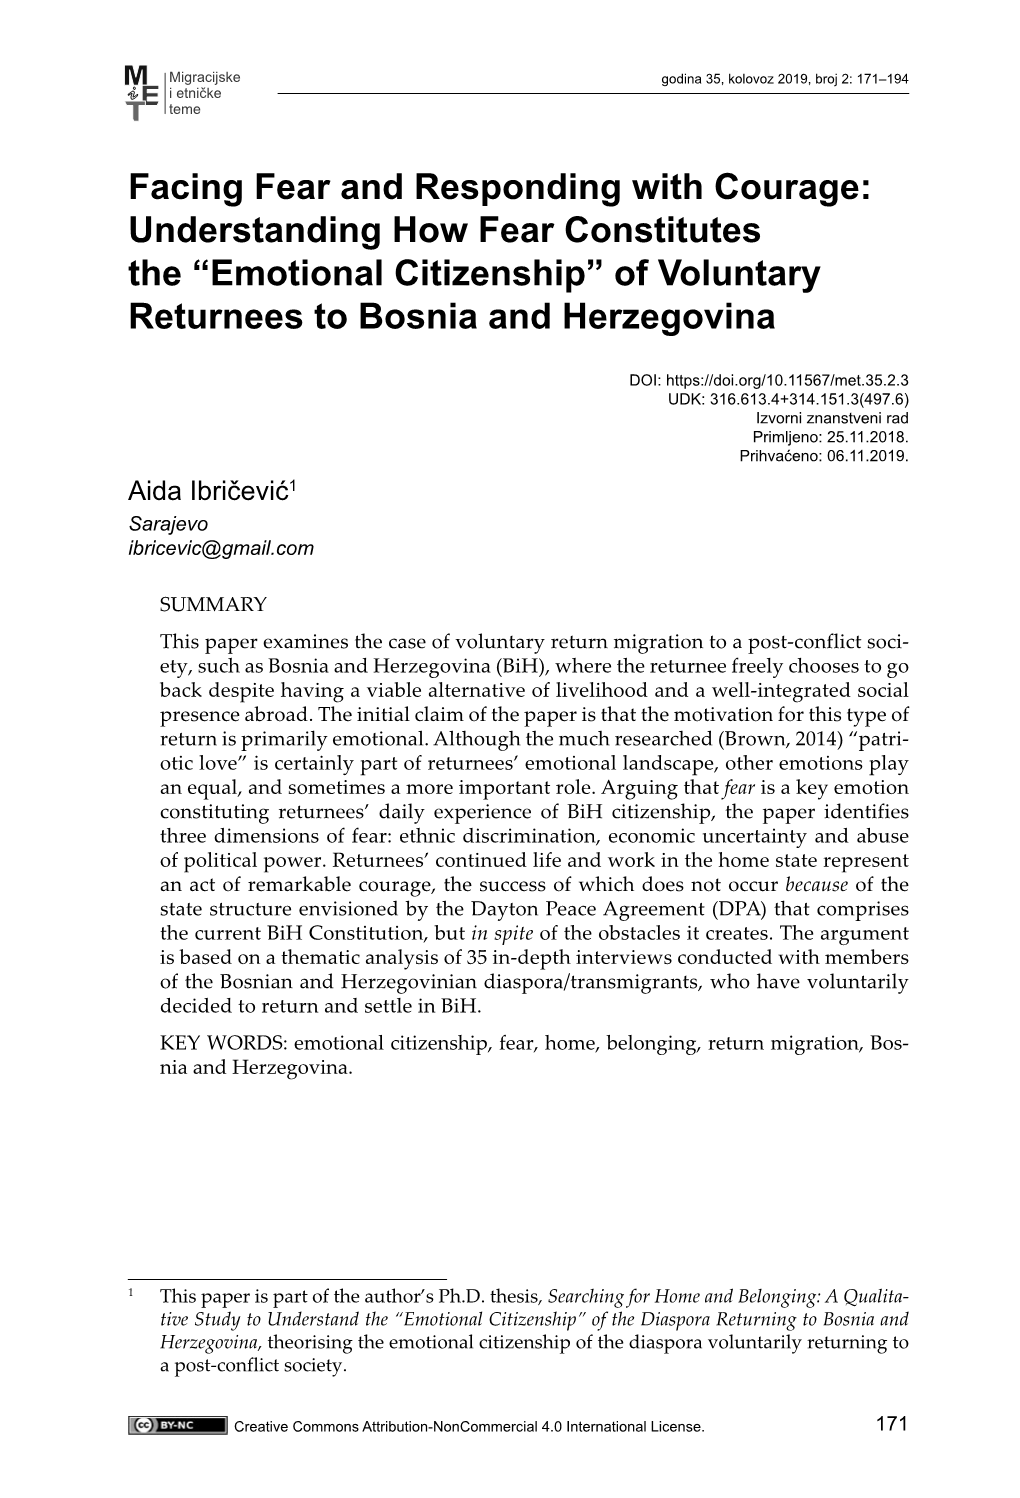 Emotional Citizenship” of Voluntary Returnees to Bosnia and Herzegovina 100